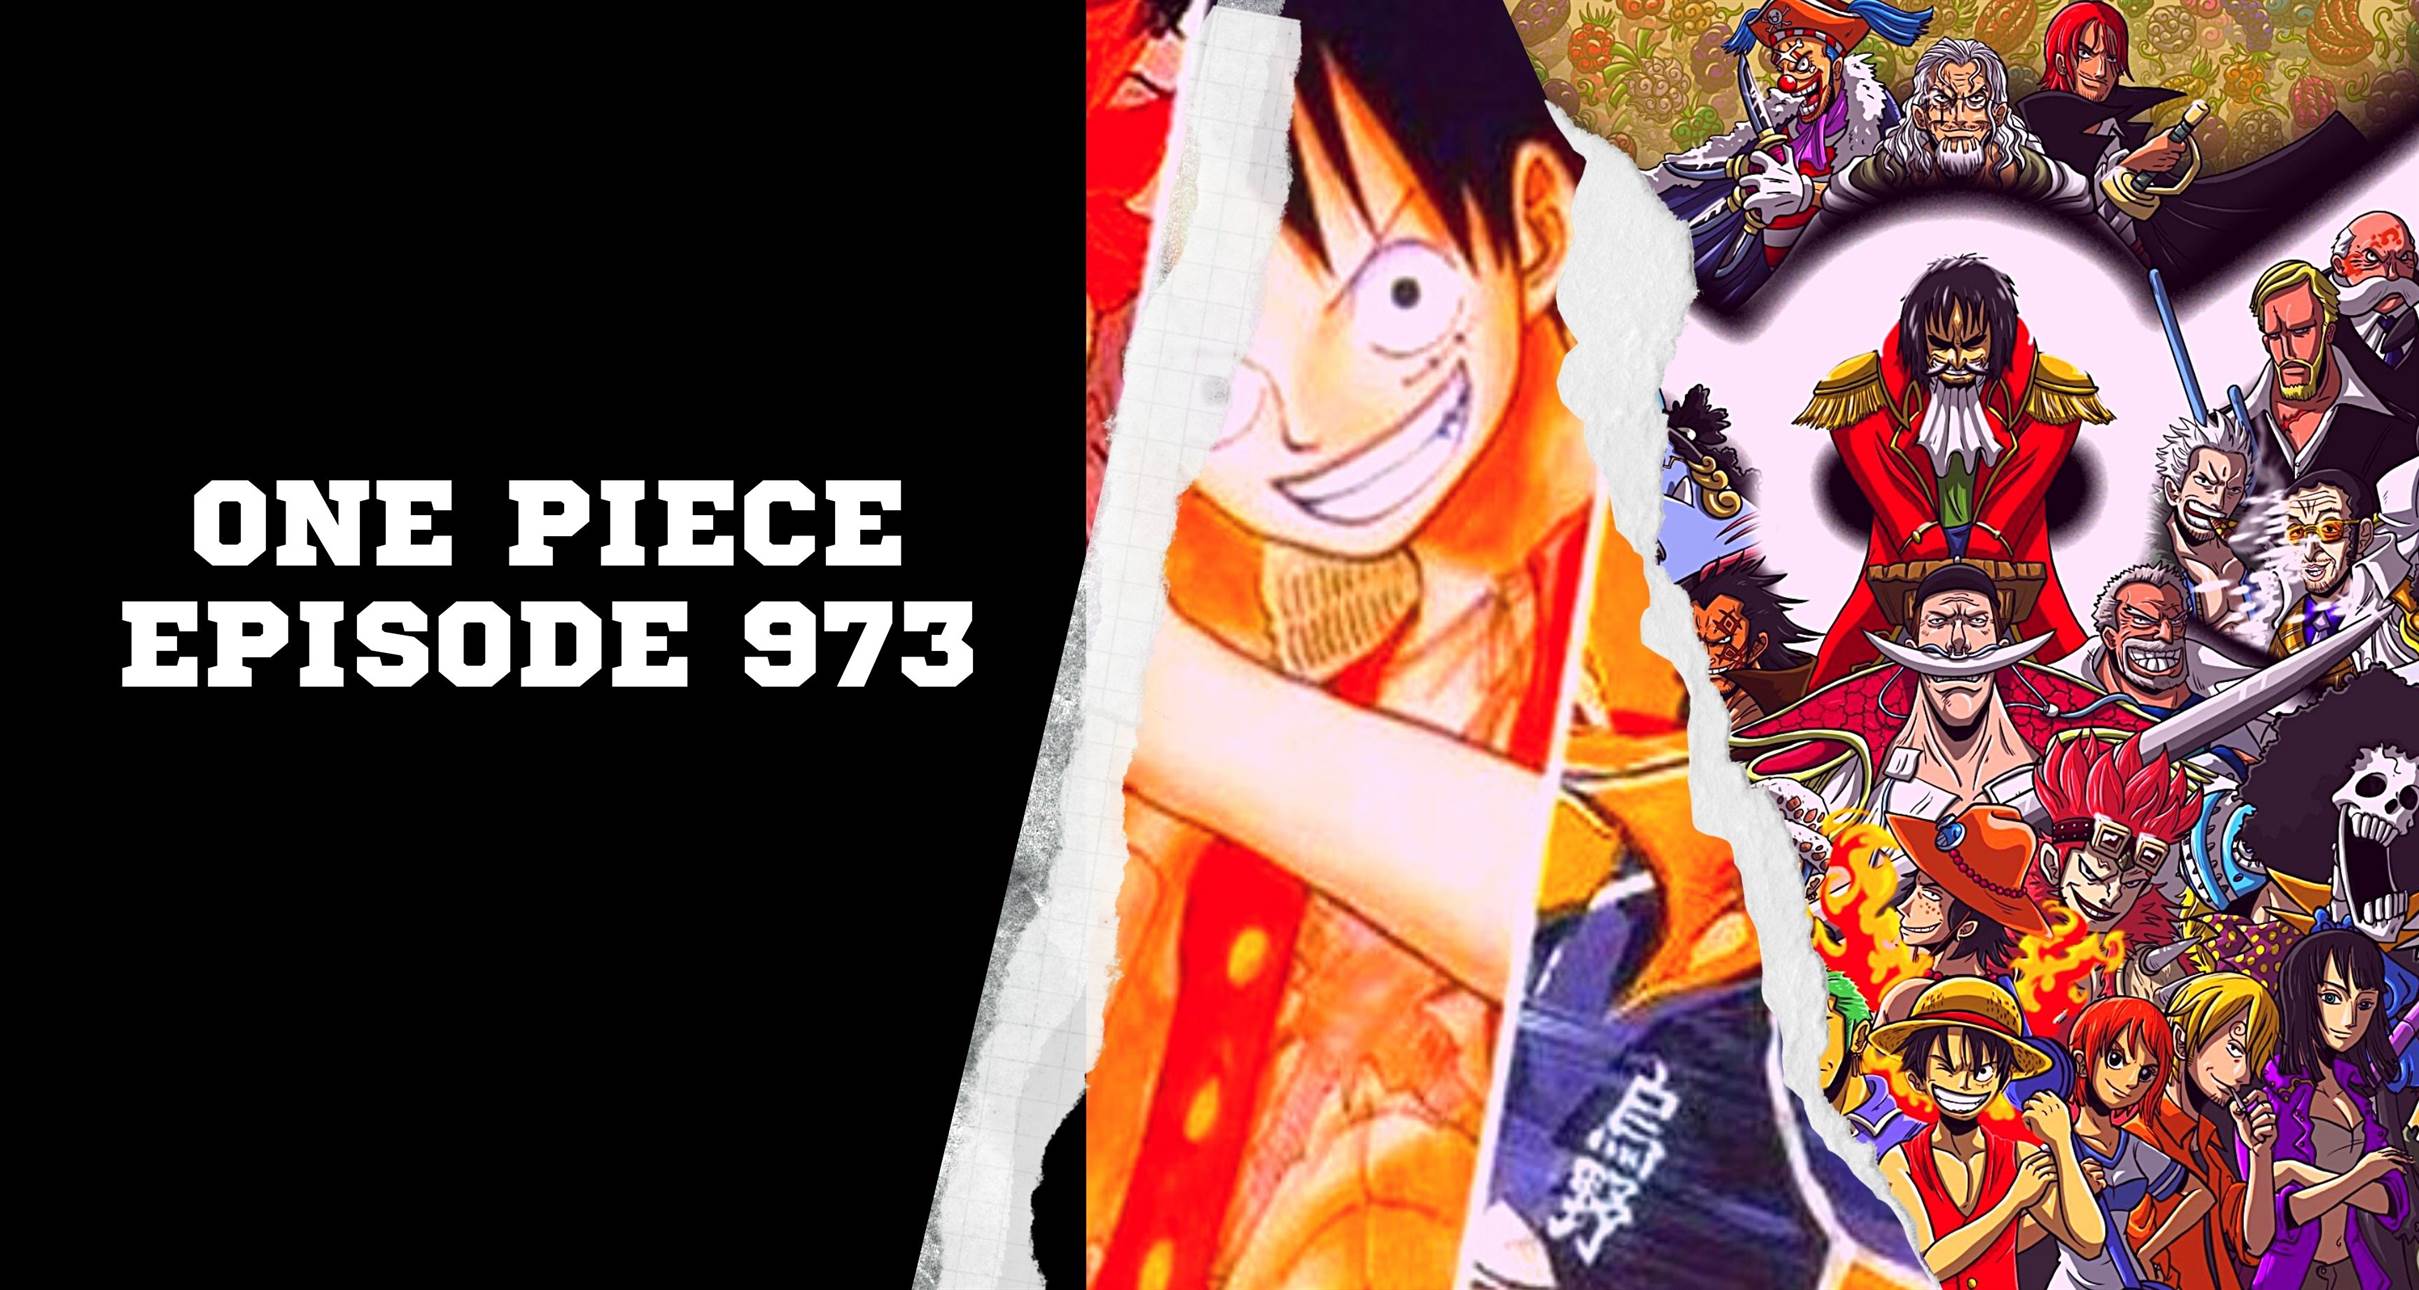 One Piece Episode 973 Date